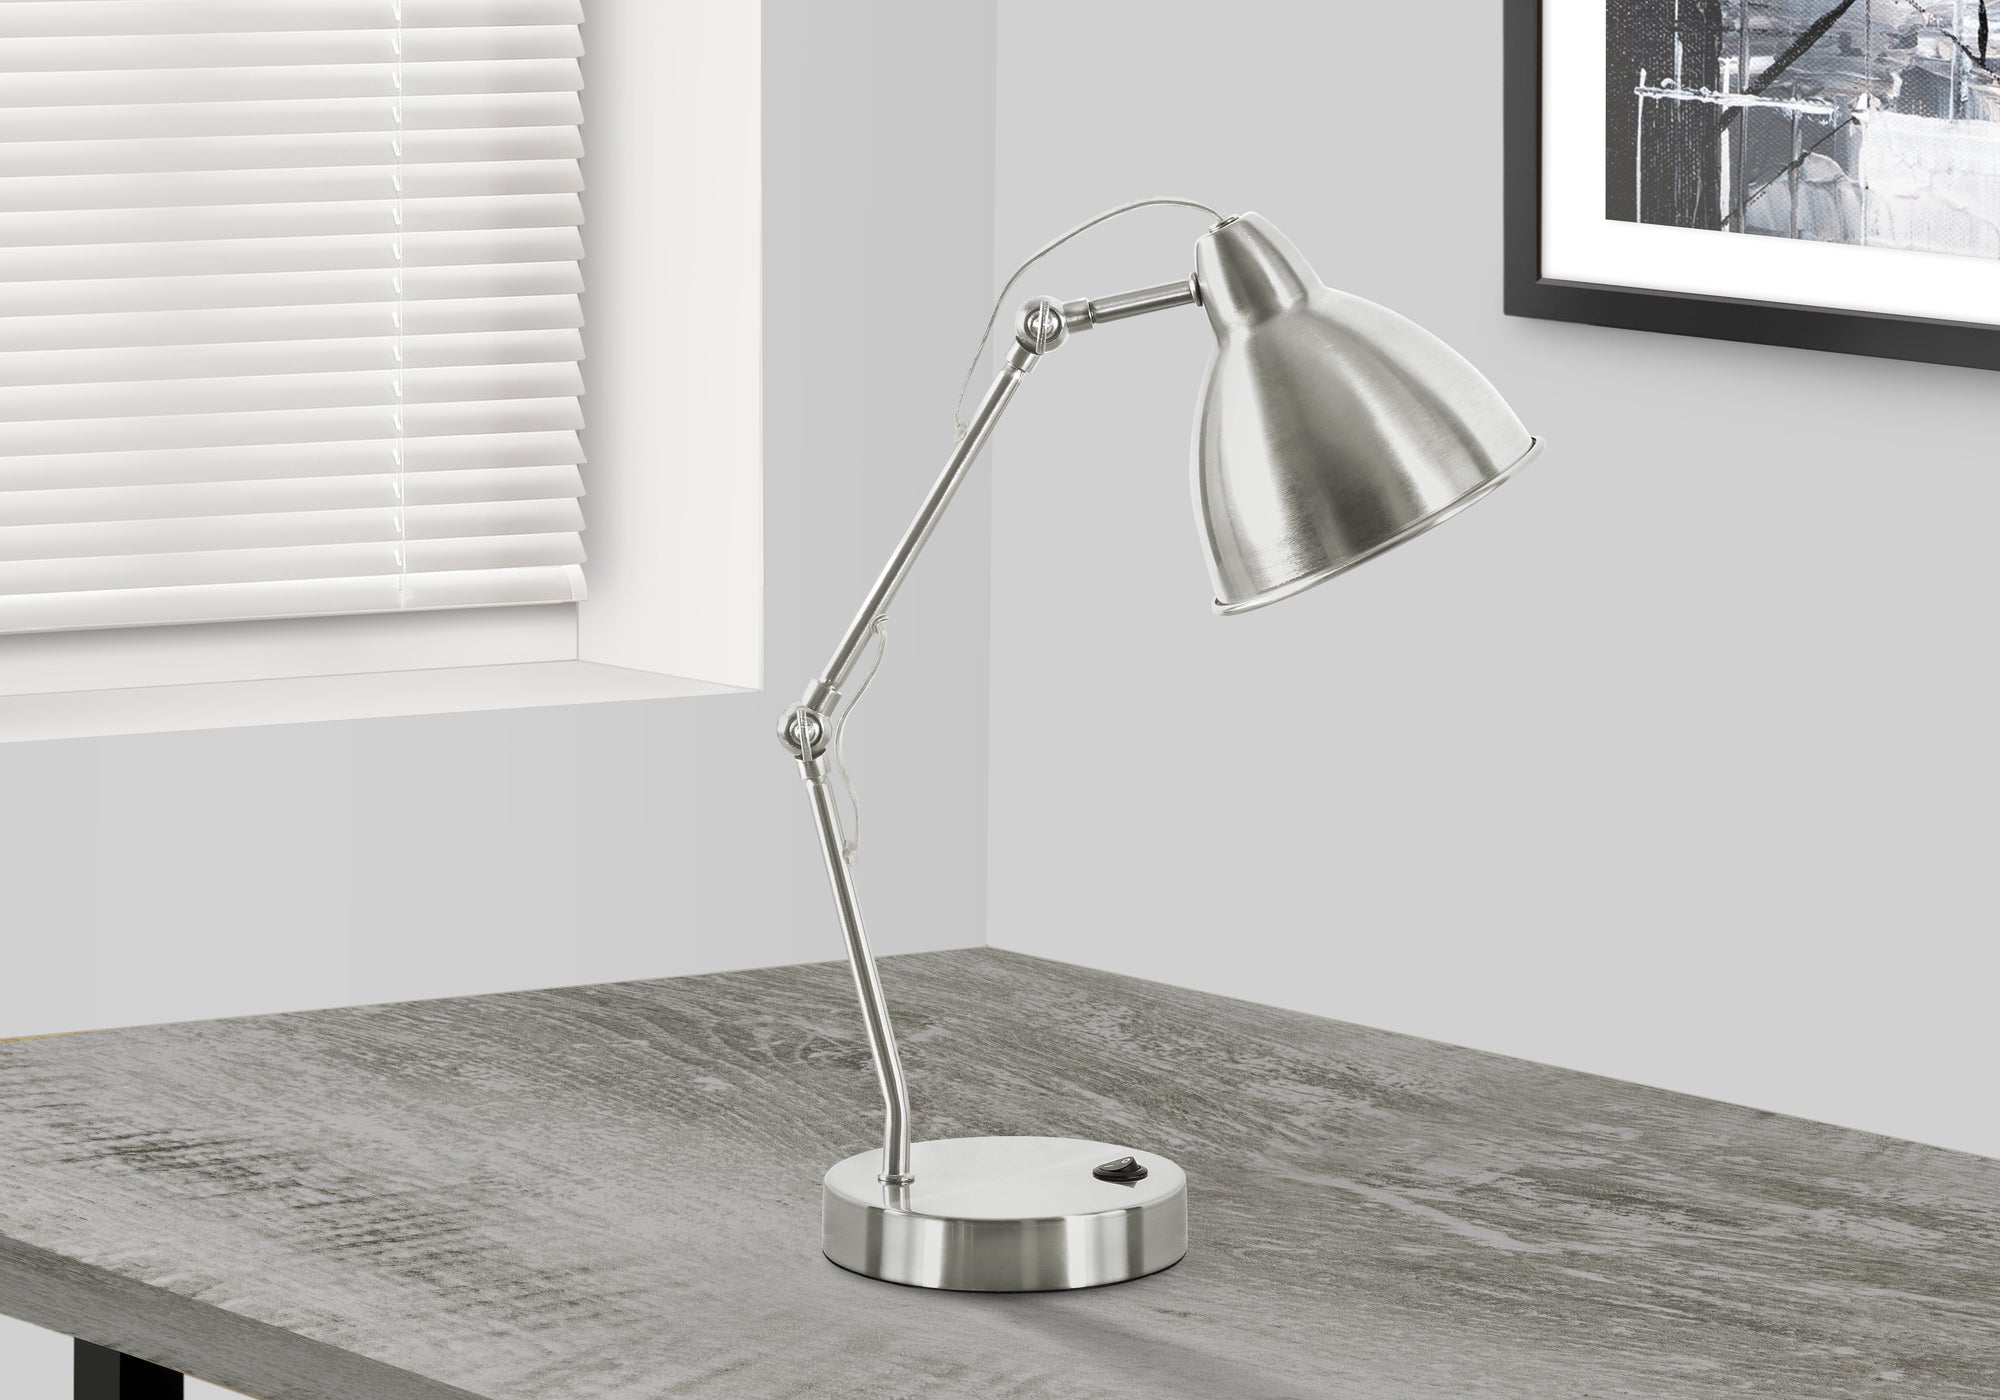 MN-349659    Lighting, 17"H, Table Lamp, Usb Port Included, Nickel Metal, Nickel Shade, Modern